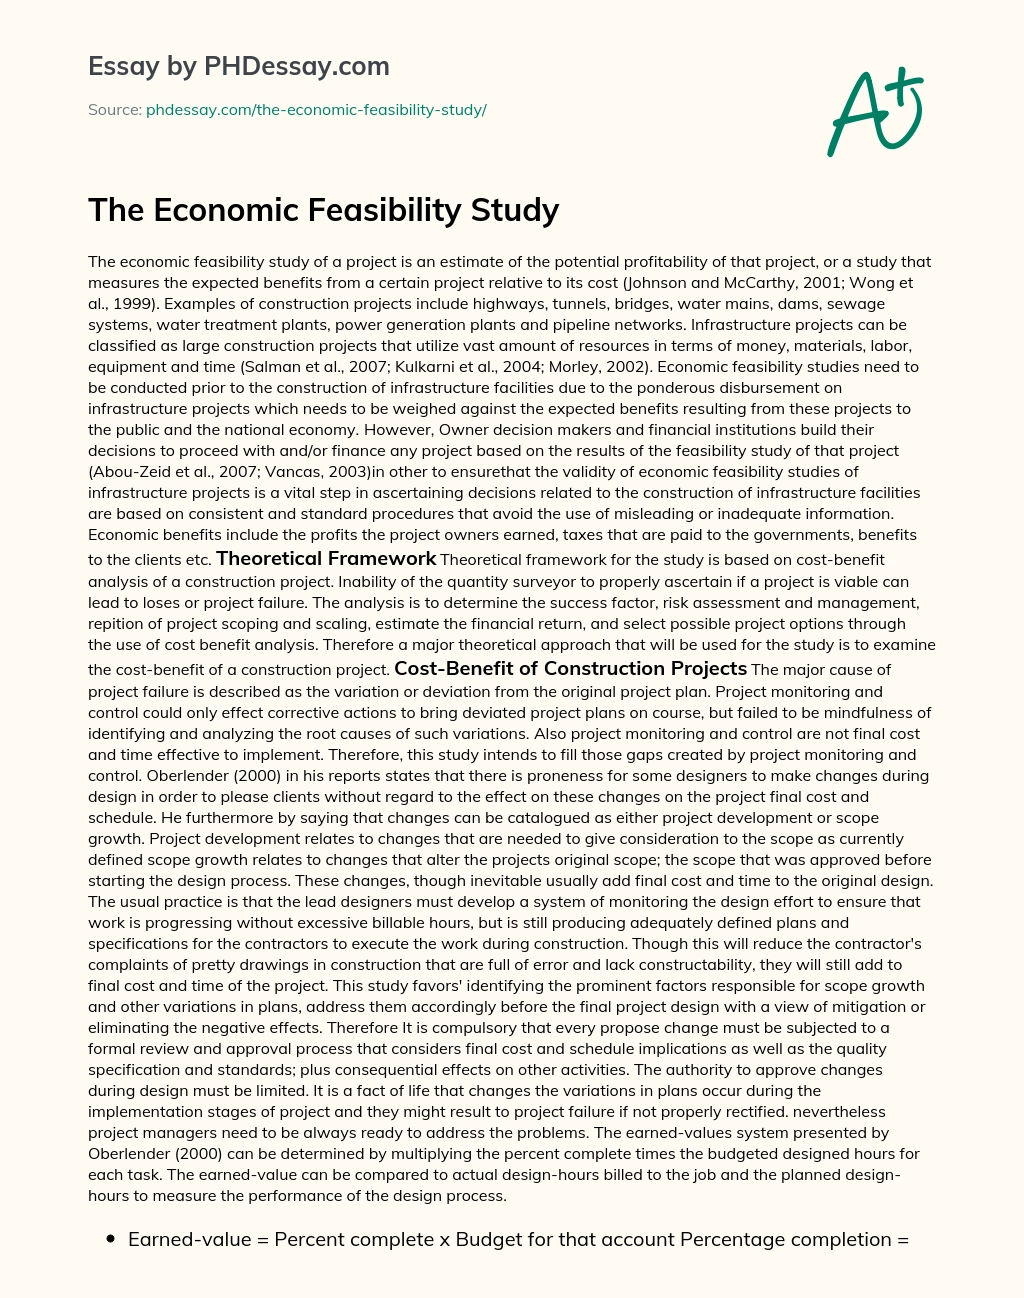 The Economic Feasibility Study essay